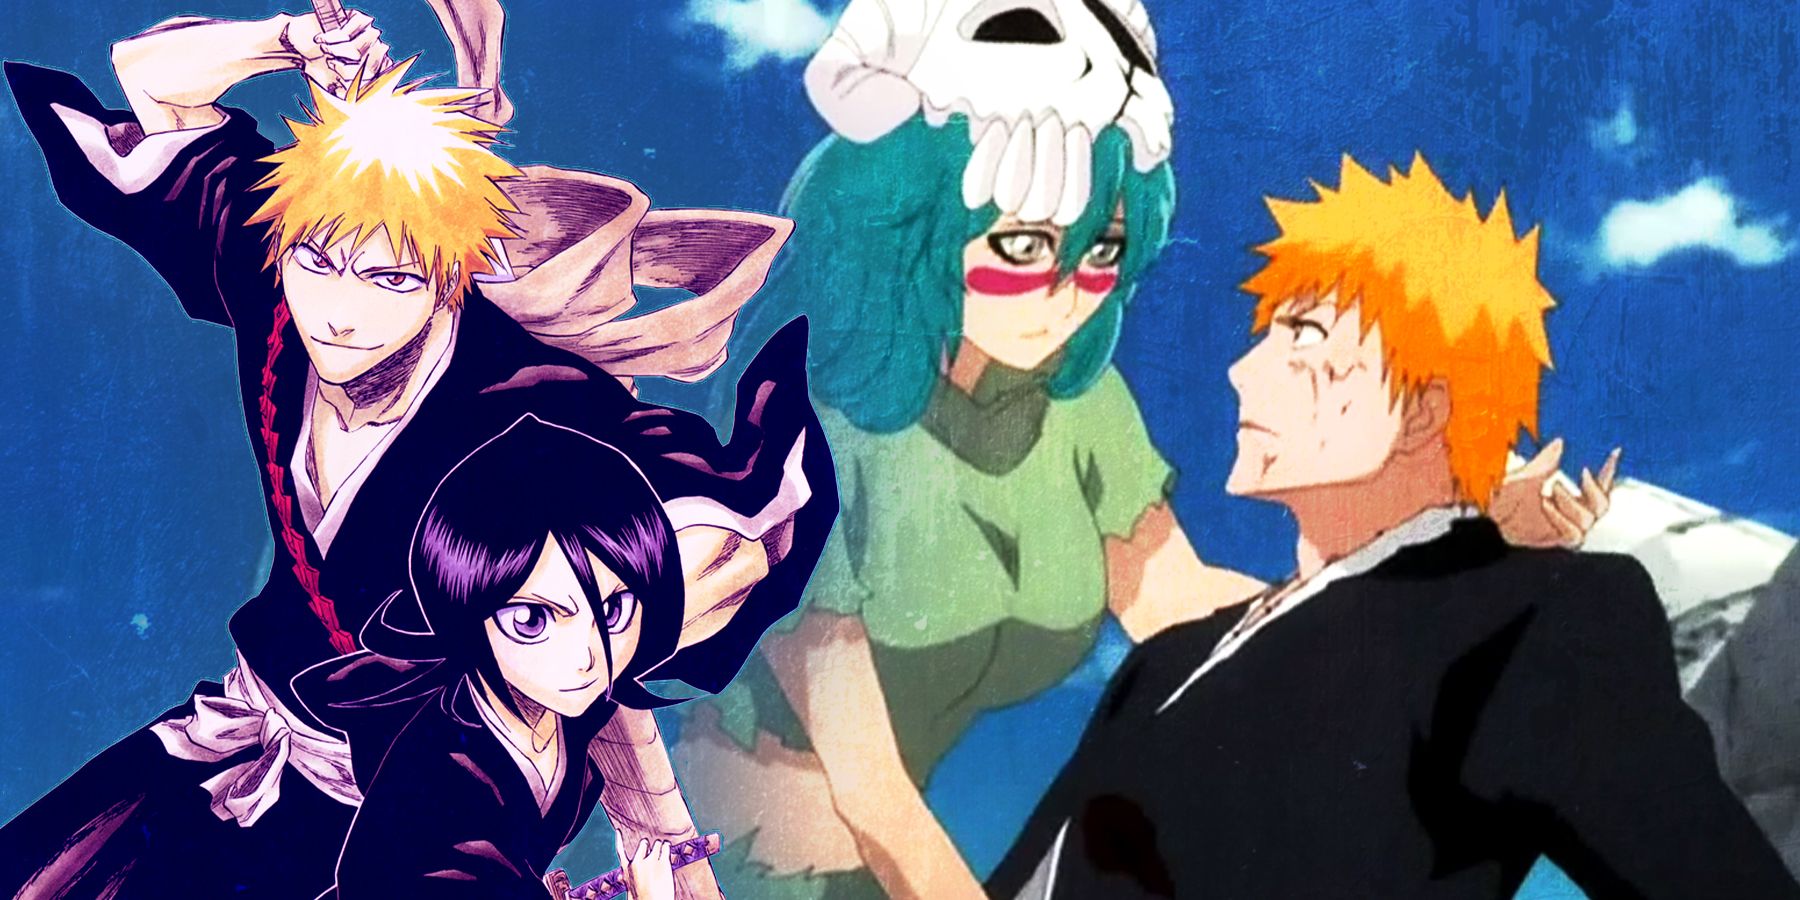 Weird ships by the fandom me enjoying a new anime meme  Anime Memes